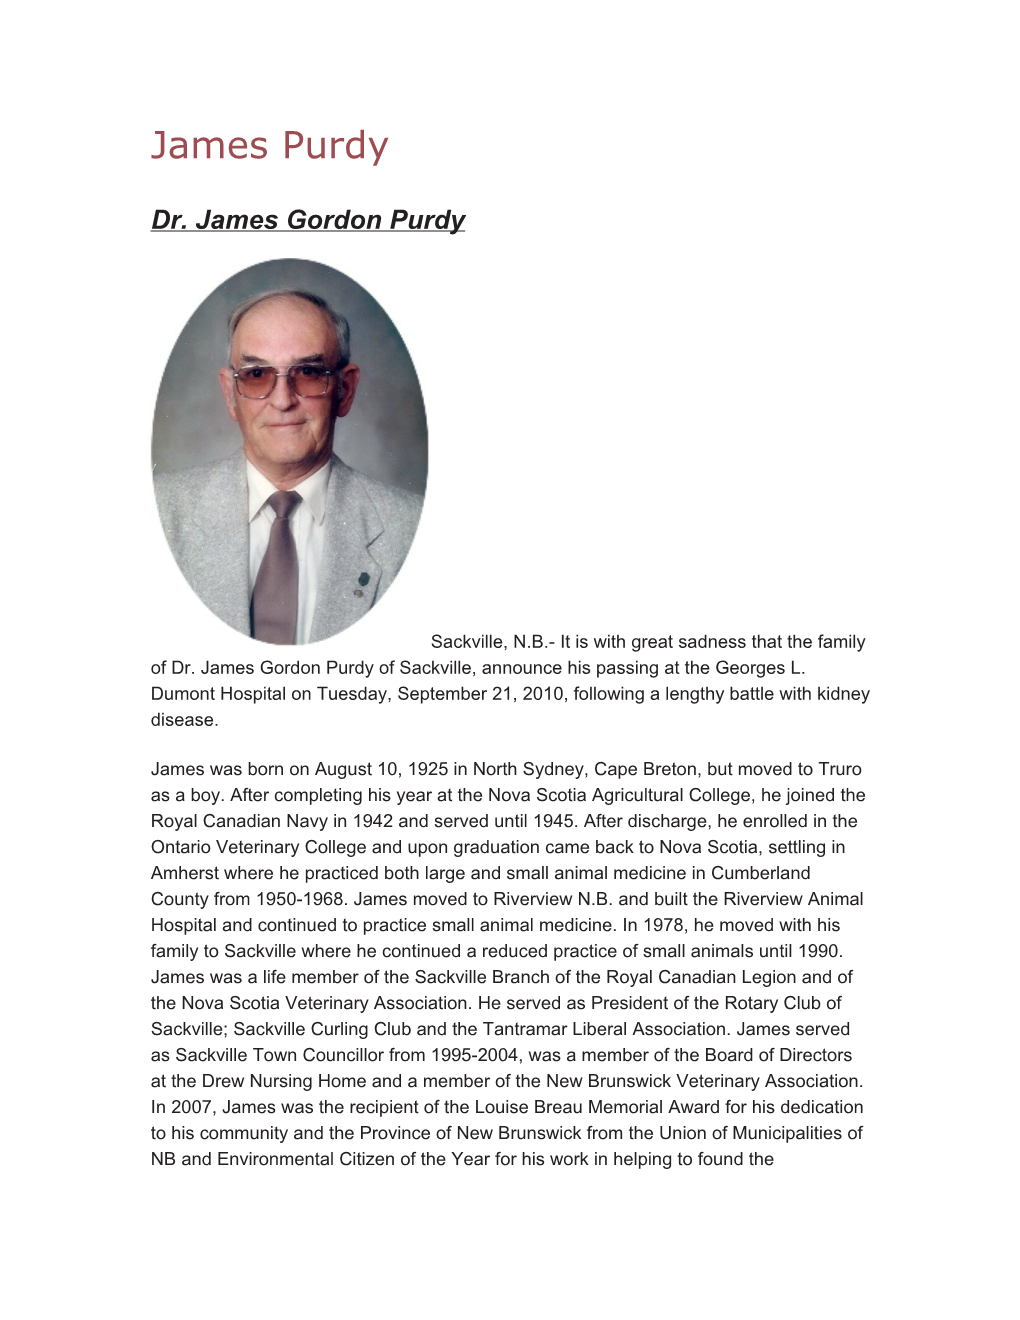 Dr. James Gordon Purdy